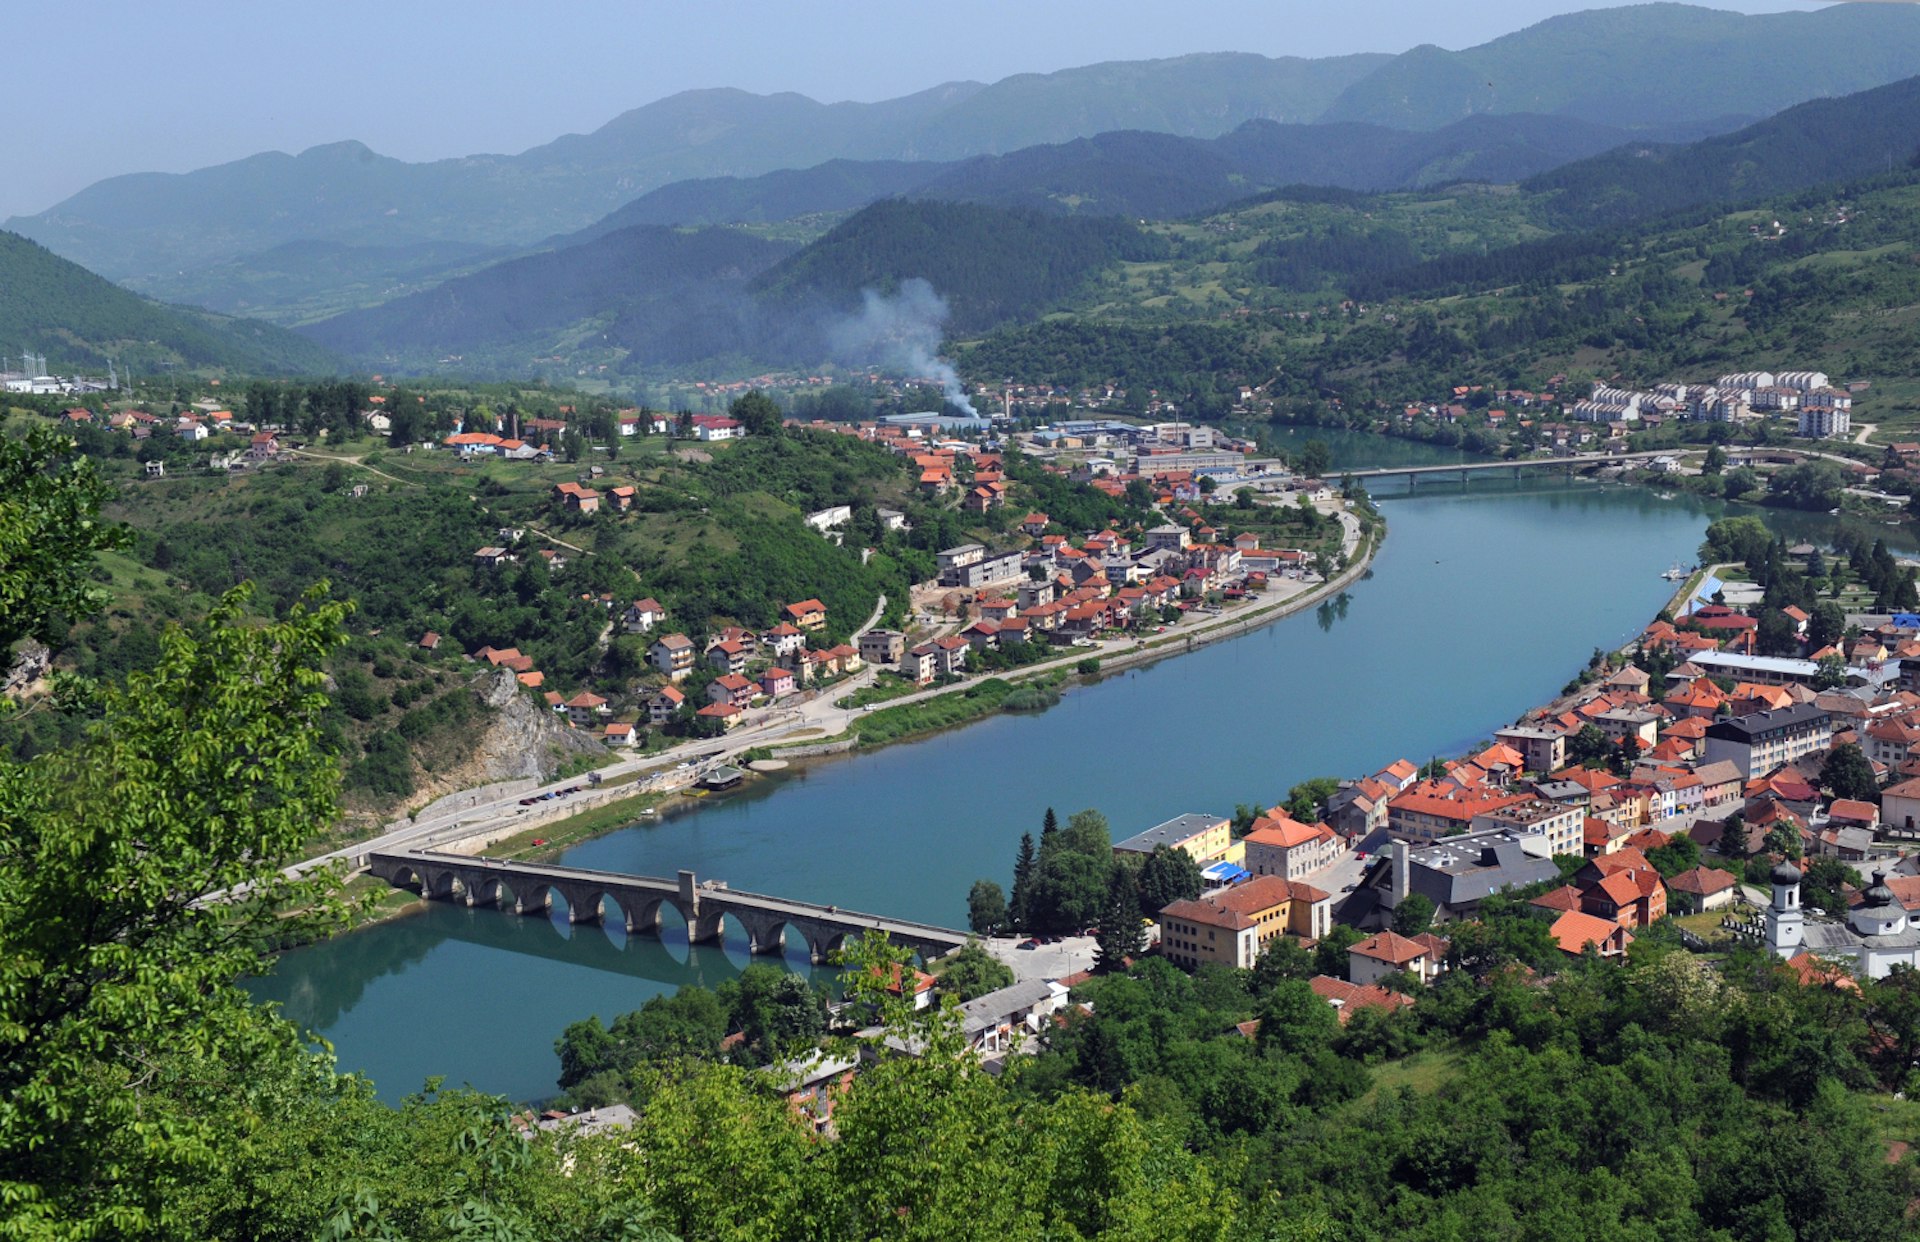 The Mehmet Paša Sokolović Bridge in Višegrad. Image by Bernd Zillich / Getty